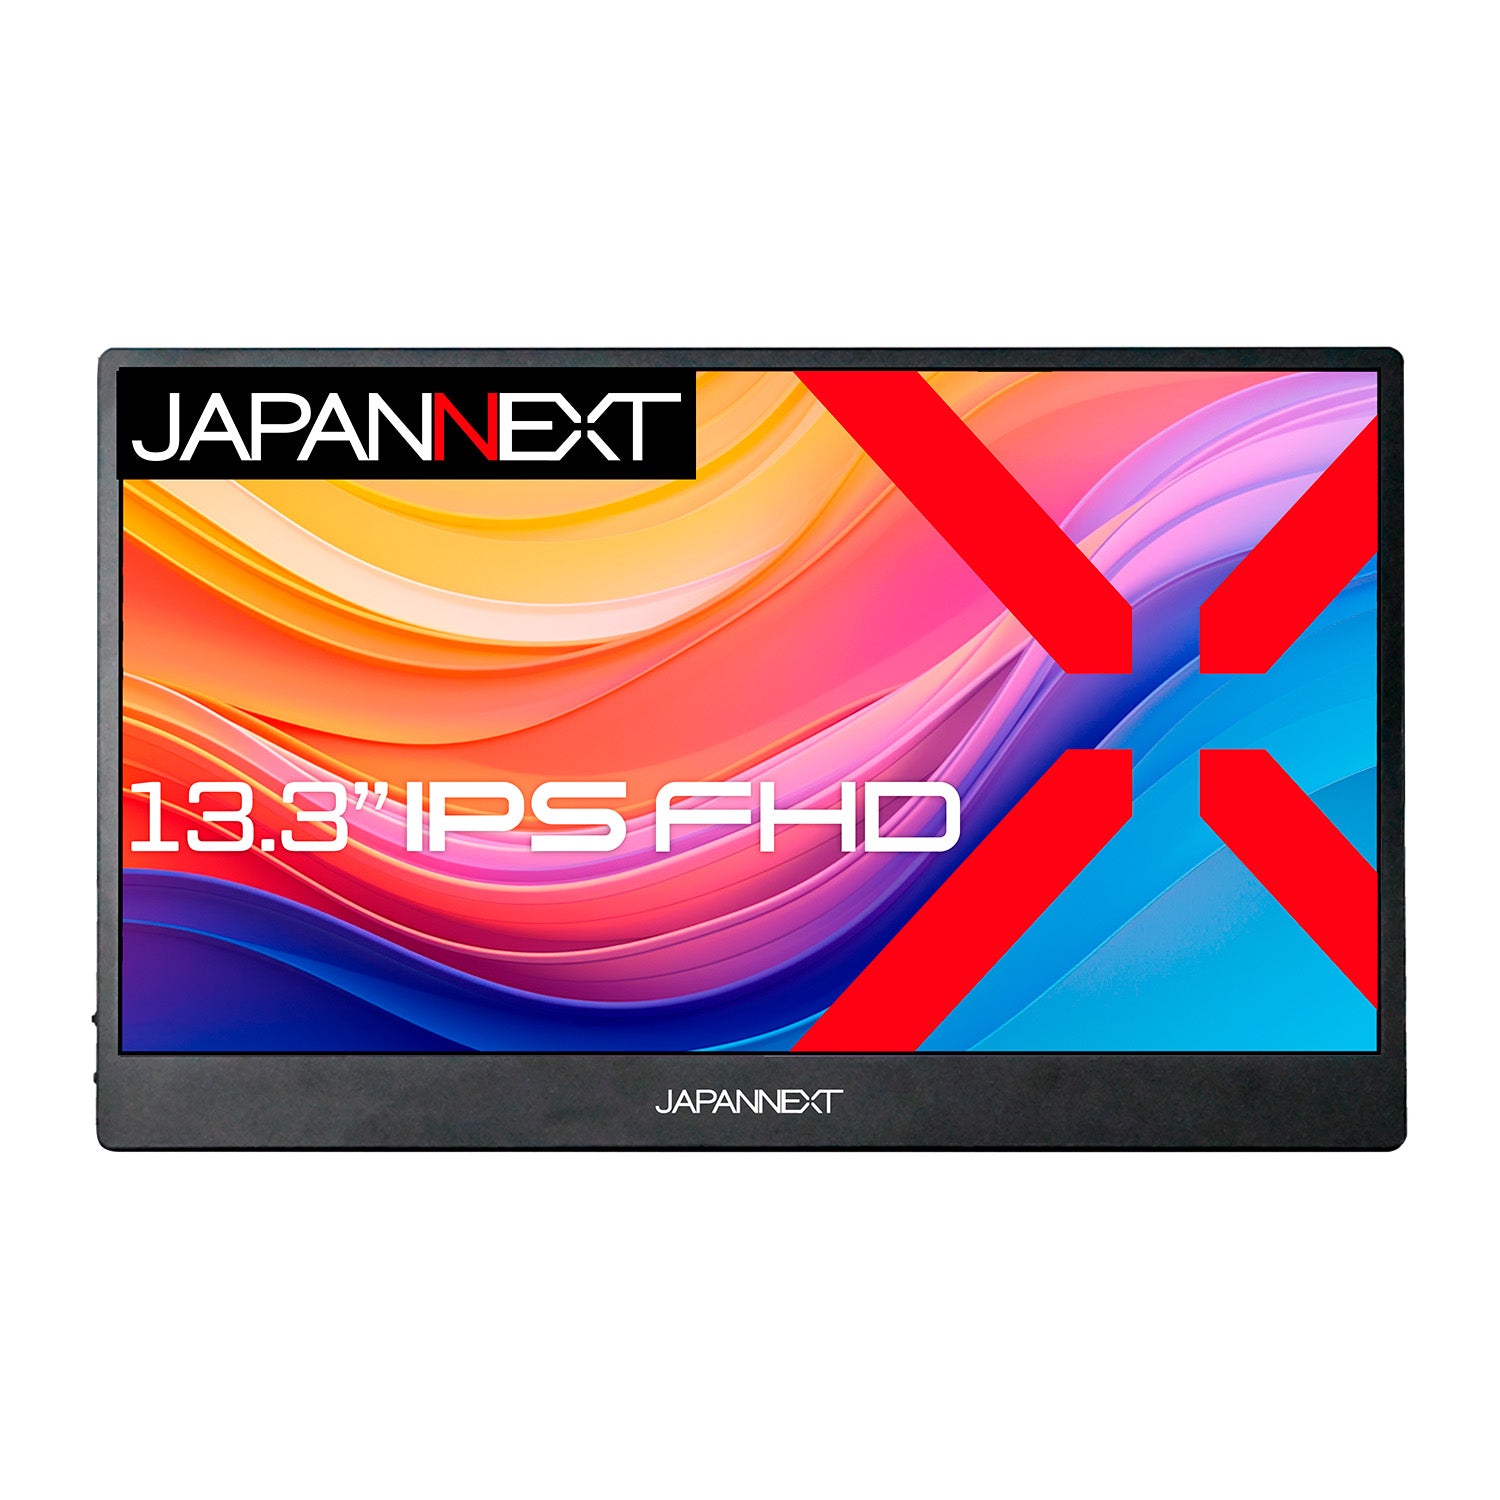 JAPANNEXT 13.3インチ IPSパネル搭載 フルHD(1920x1080)解像度 